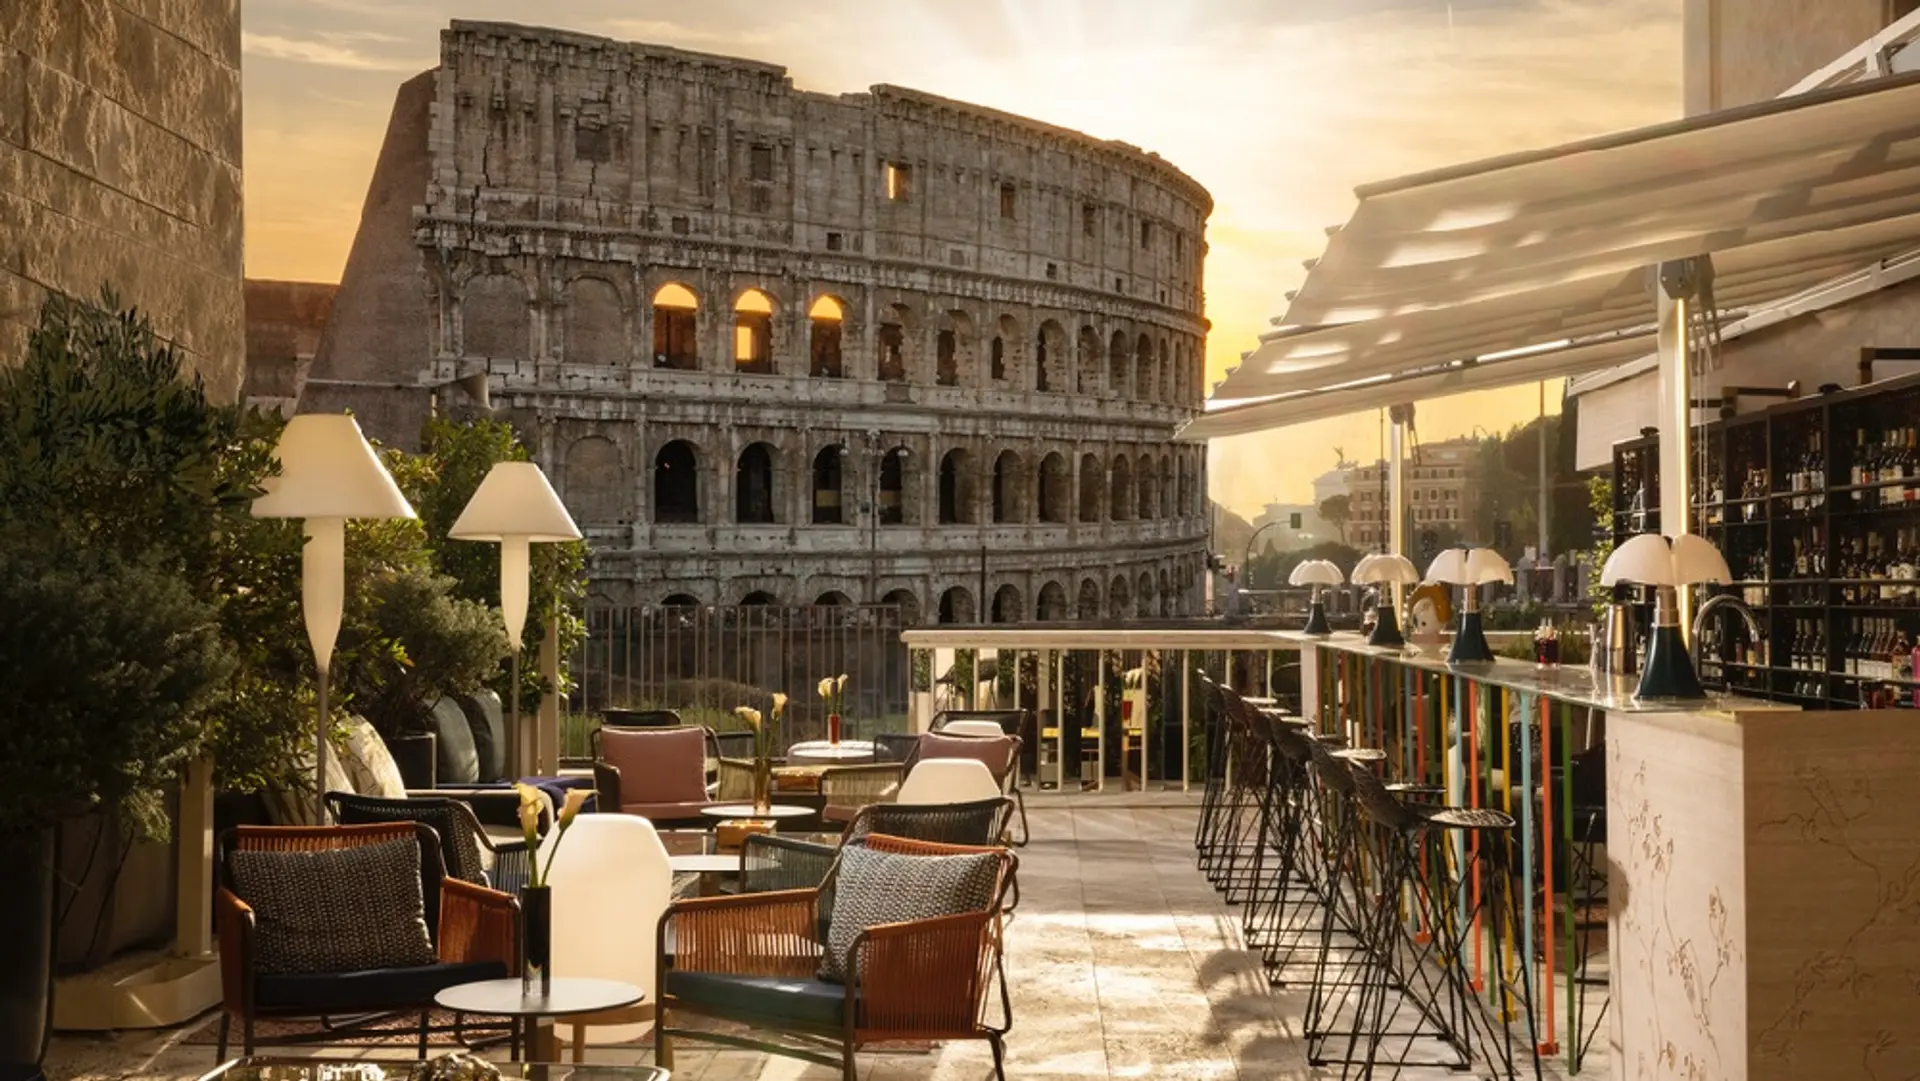 Destinations Articles - Rome Travel Guide